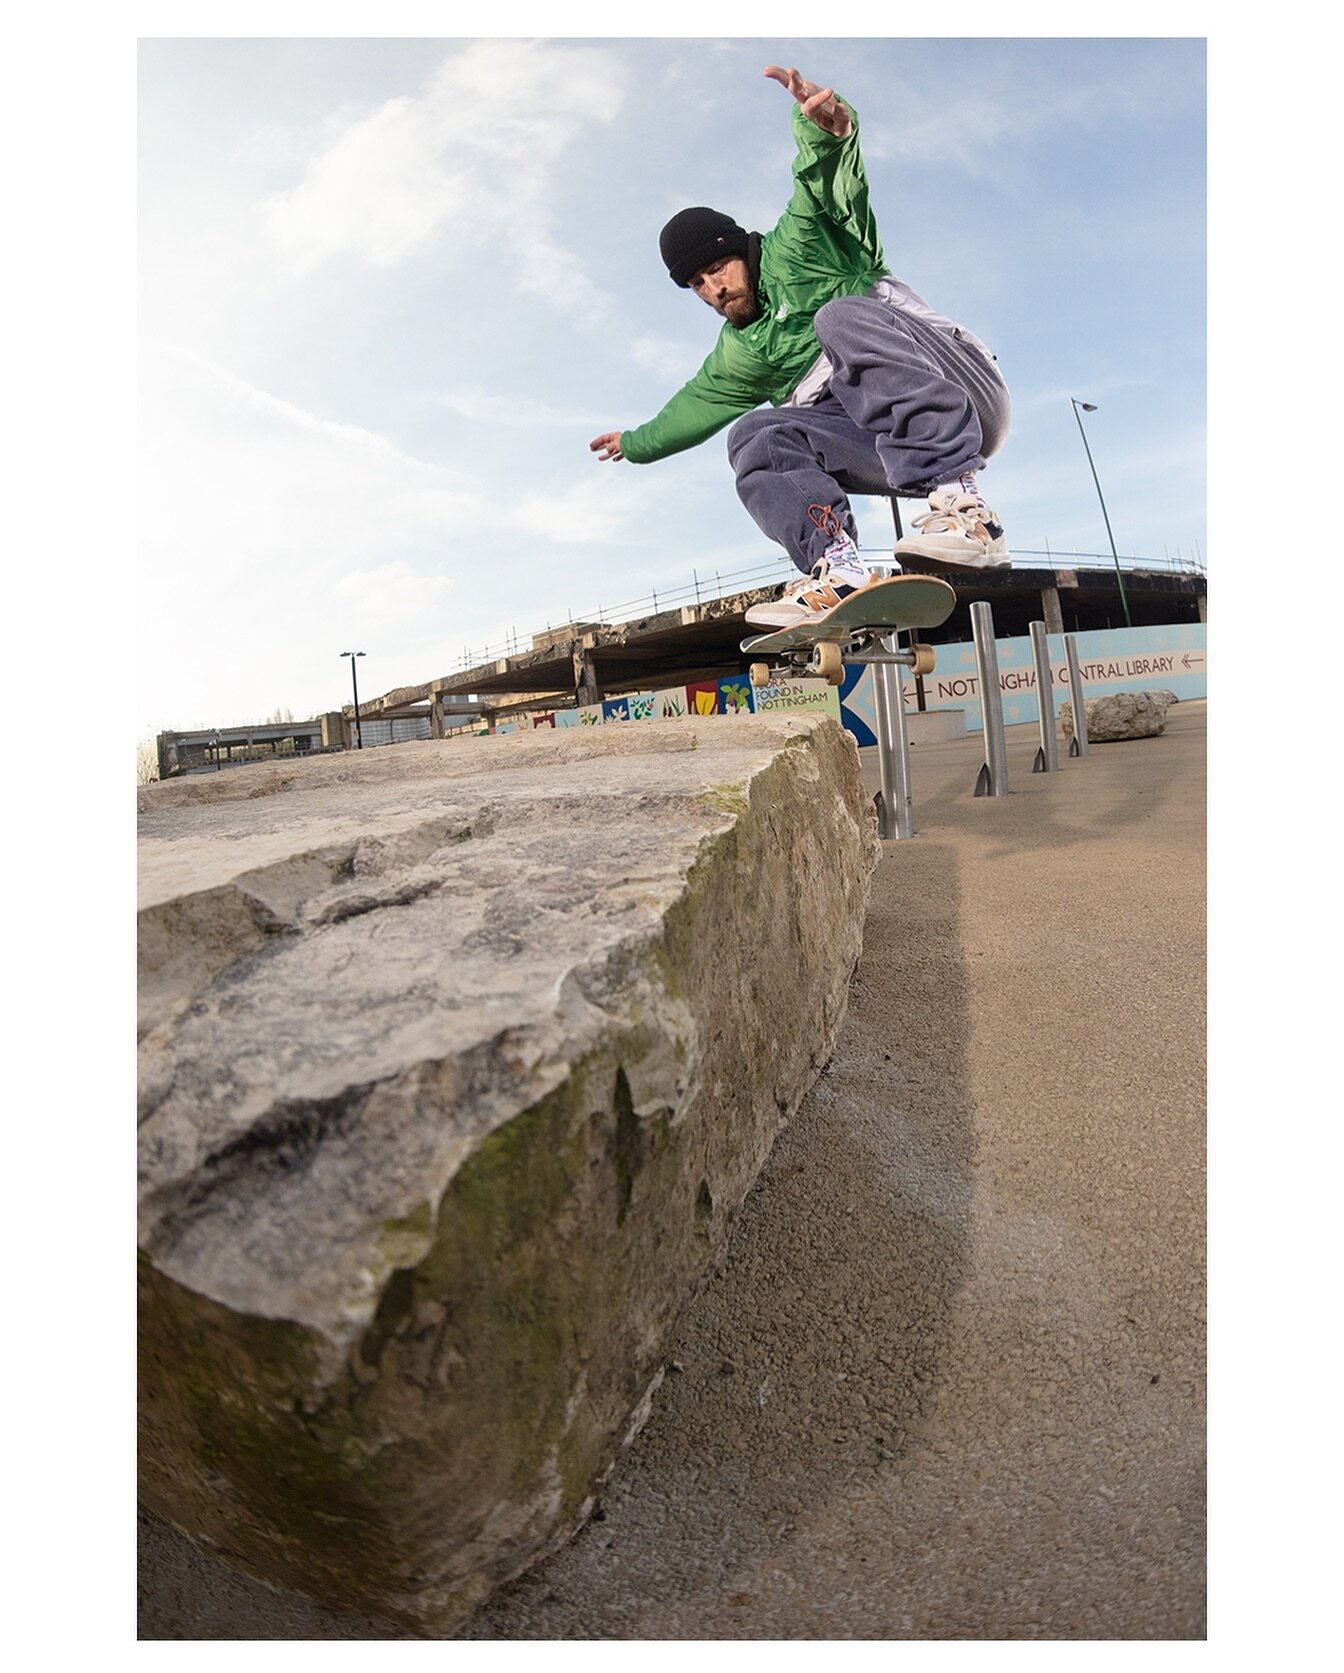 A quick switch wallie on a rock from @holttight___ at the weekend. 🙌⁣
⁣
#skateboardphotography #nottinghamskateboarding @skatenottingham